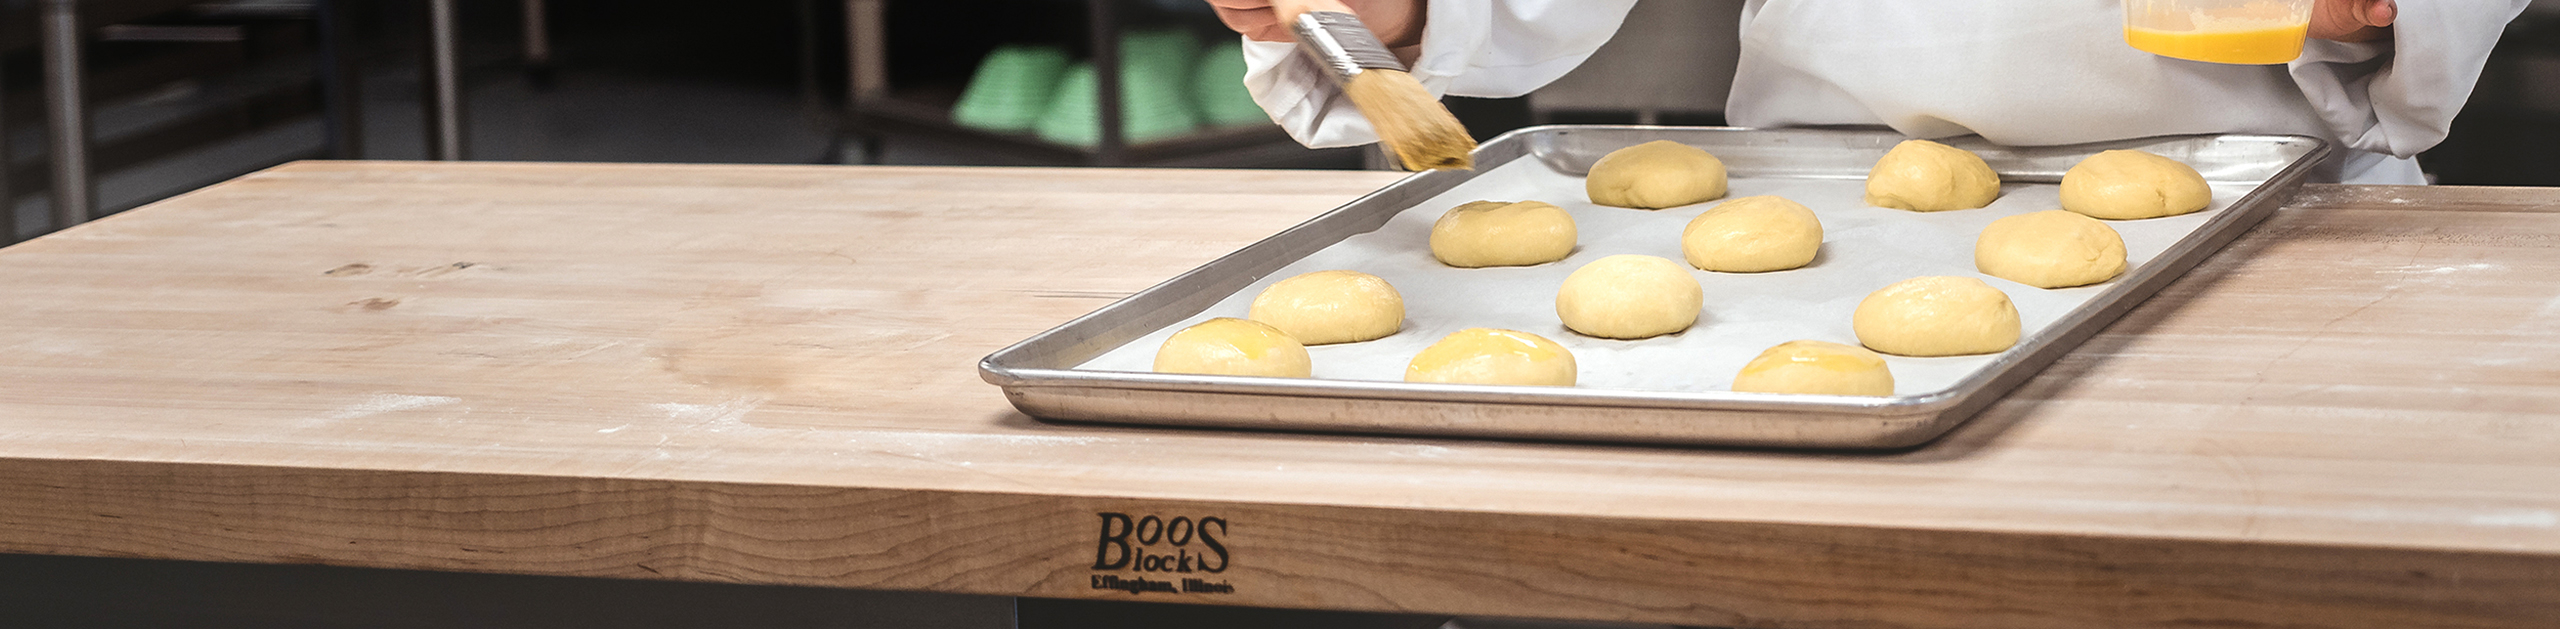 baker egg washing dough on top of butcher block countertop